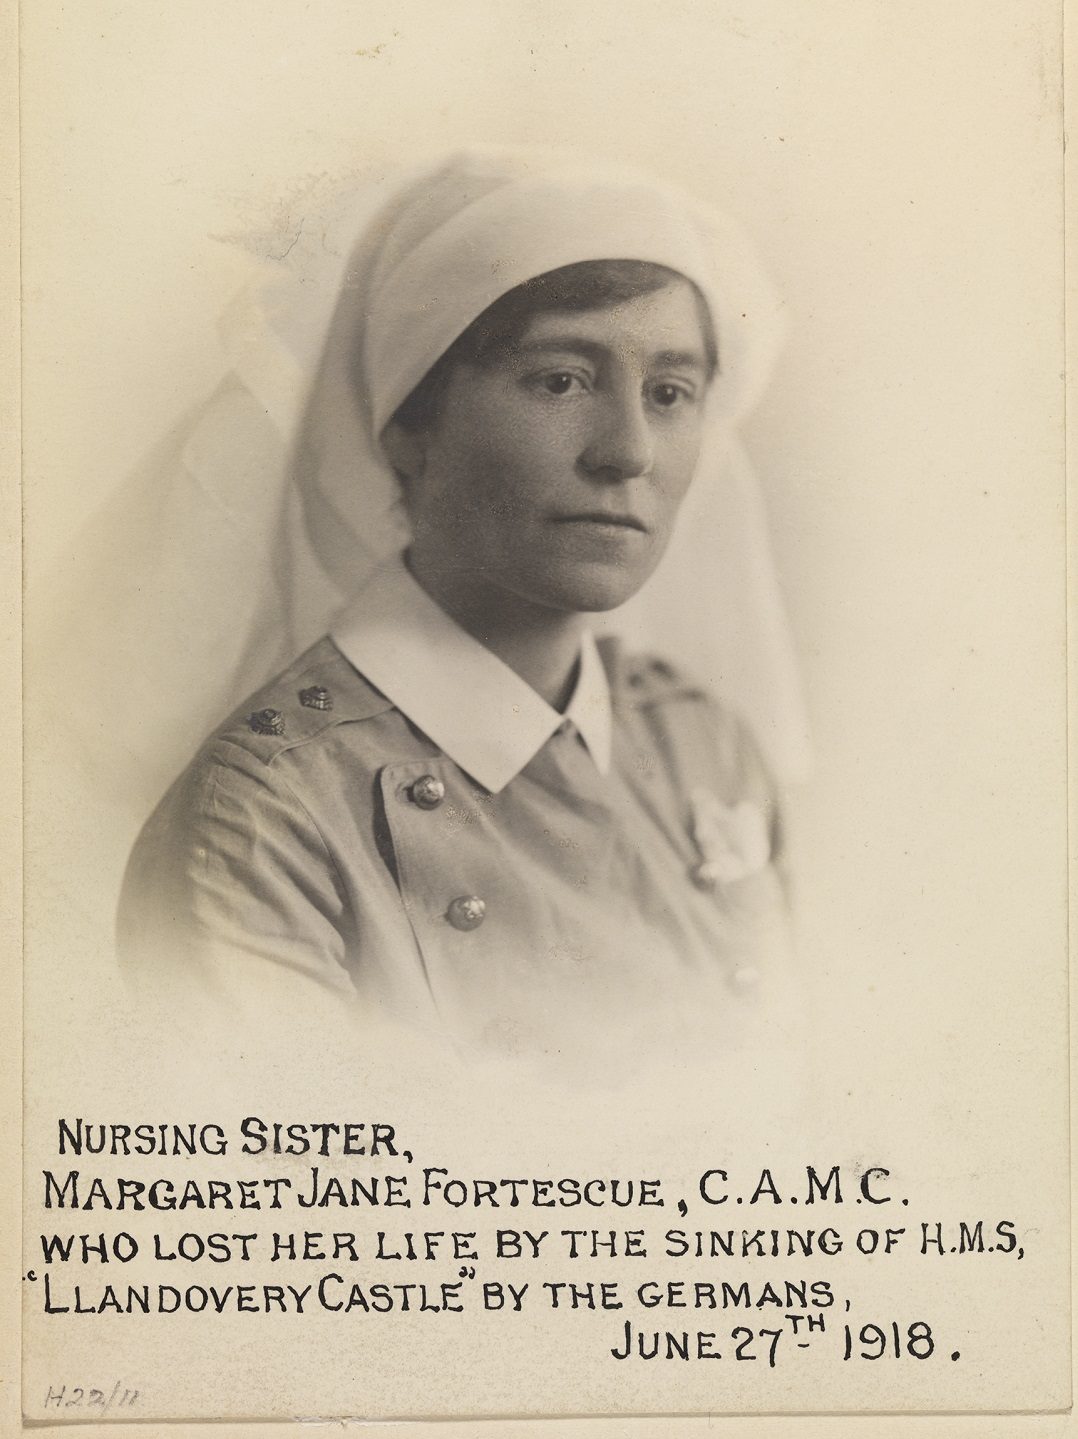 world war one era portrait of a nursing sister